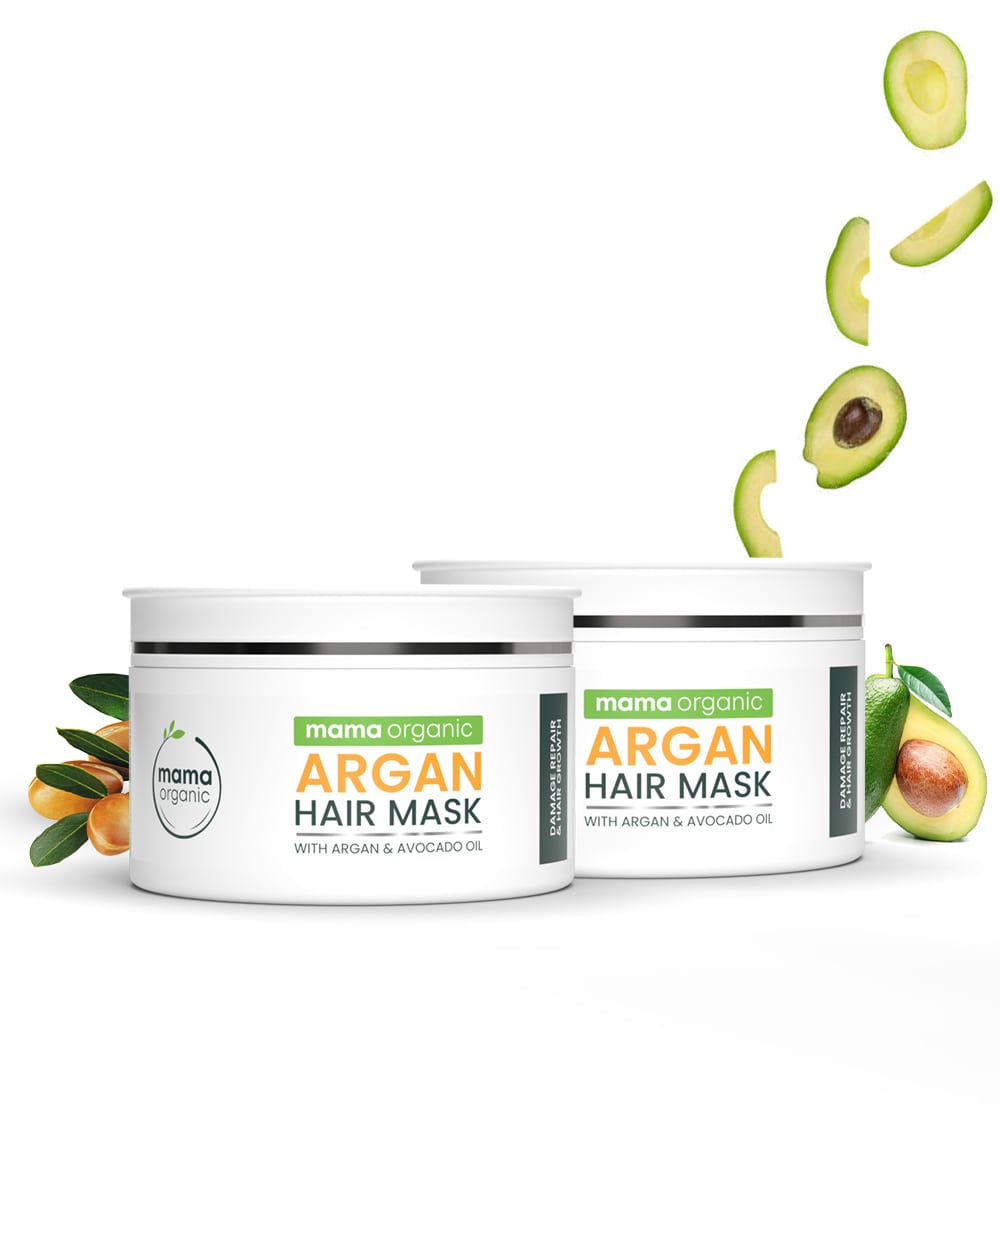 Argan Hair Mask Combo For Damage Repair & Hair Growth - Natural & Toxin-Free - MamaOrganic